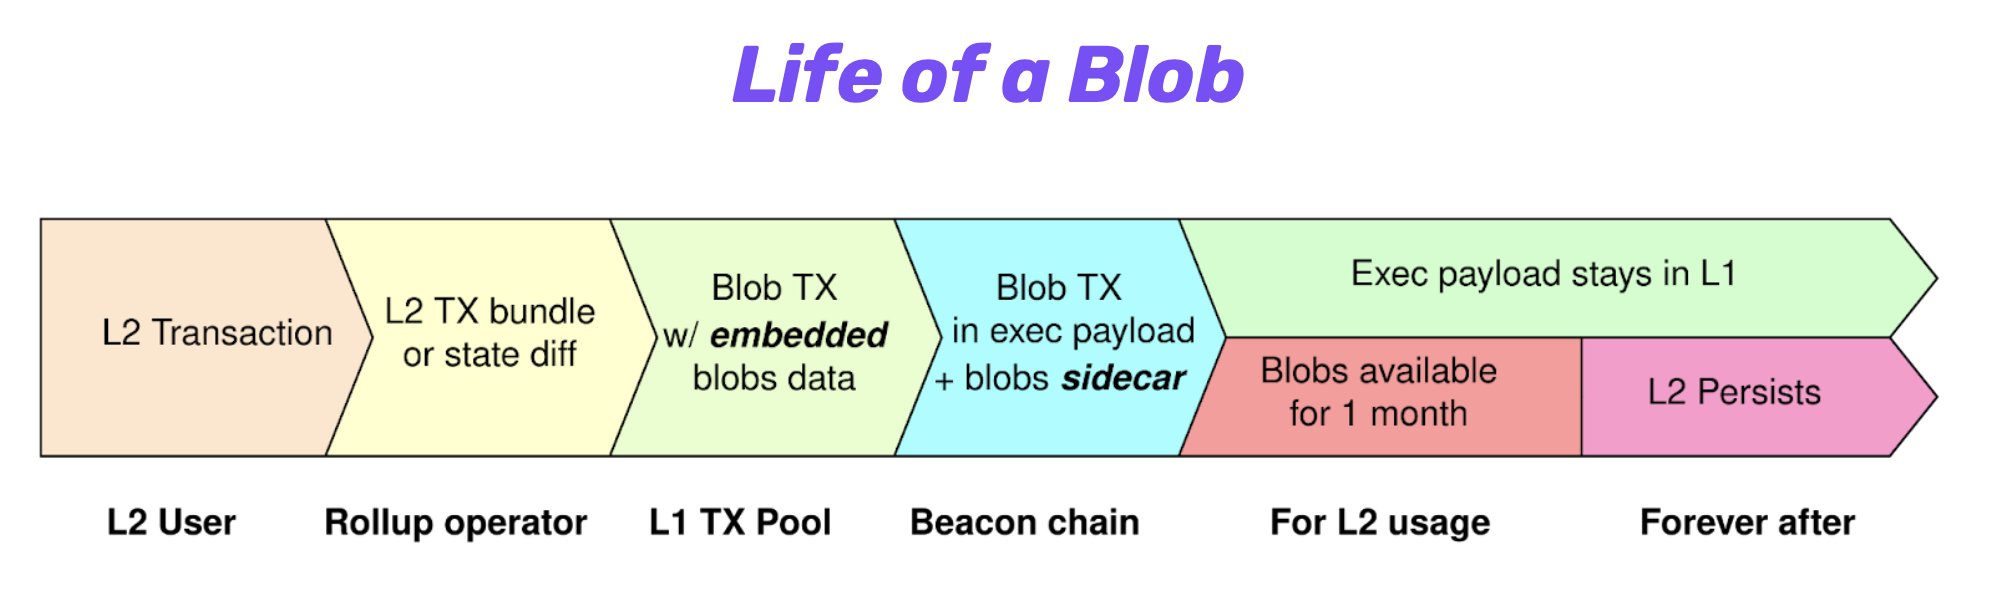 blob-life